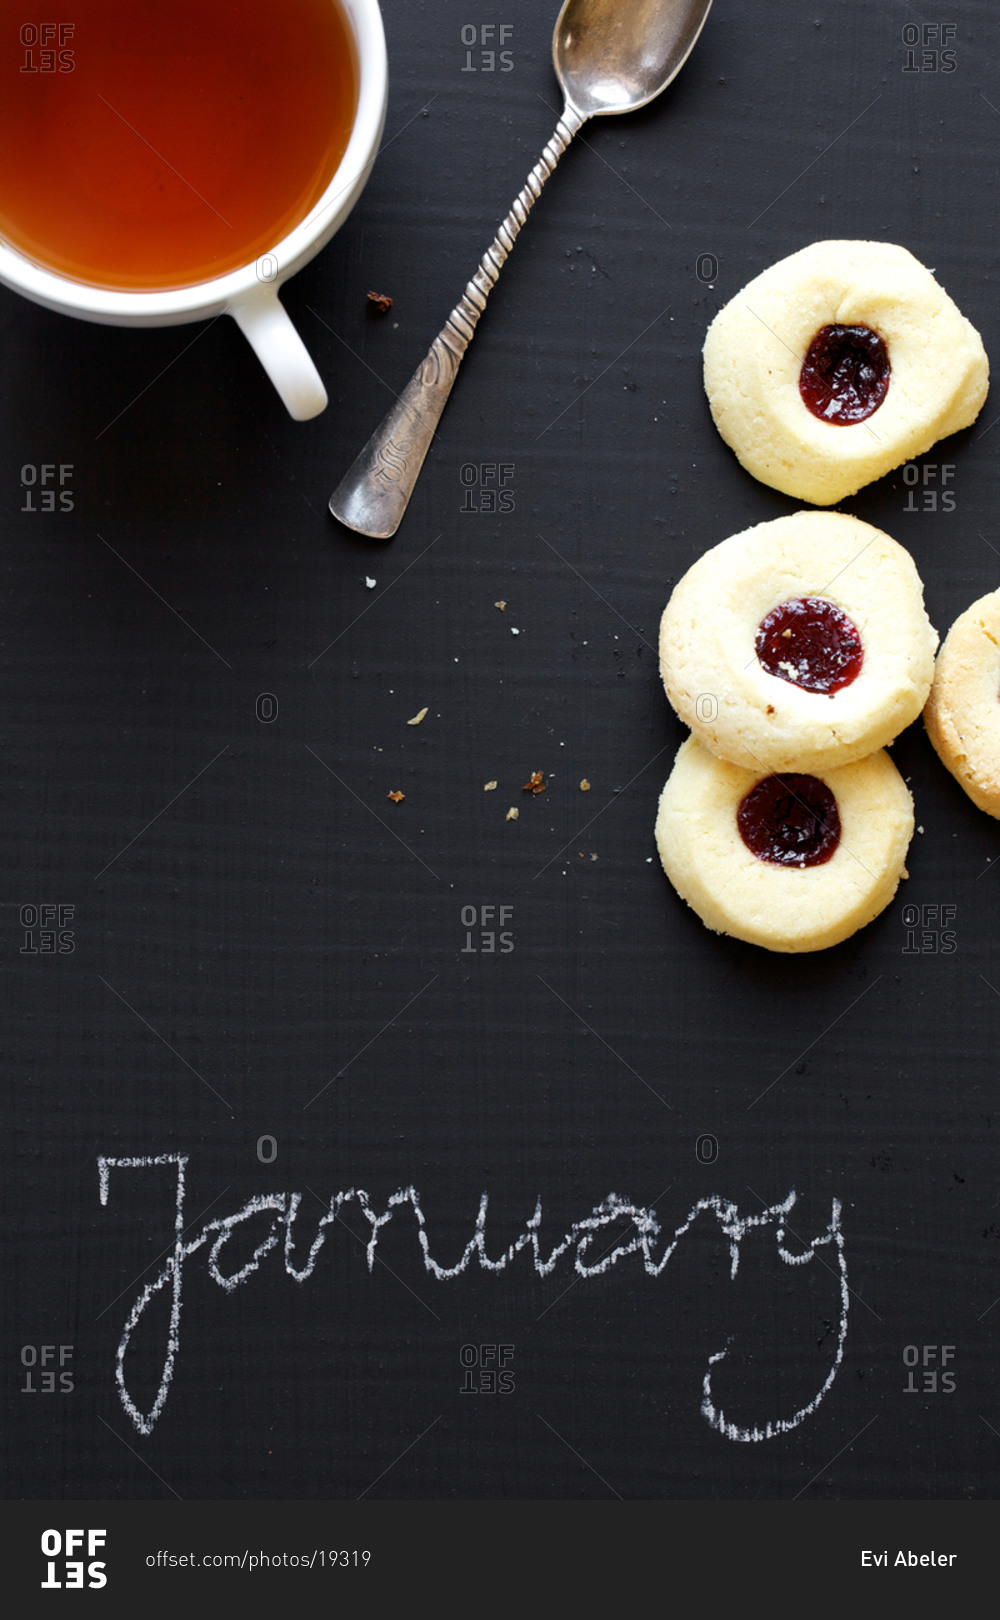 Tea, cookies and January word written on blackboard